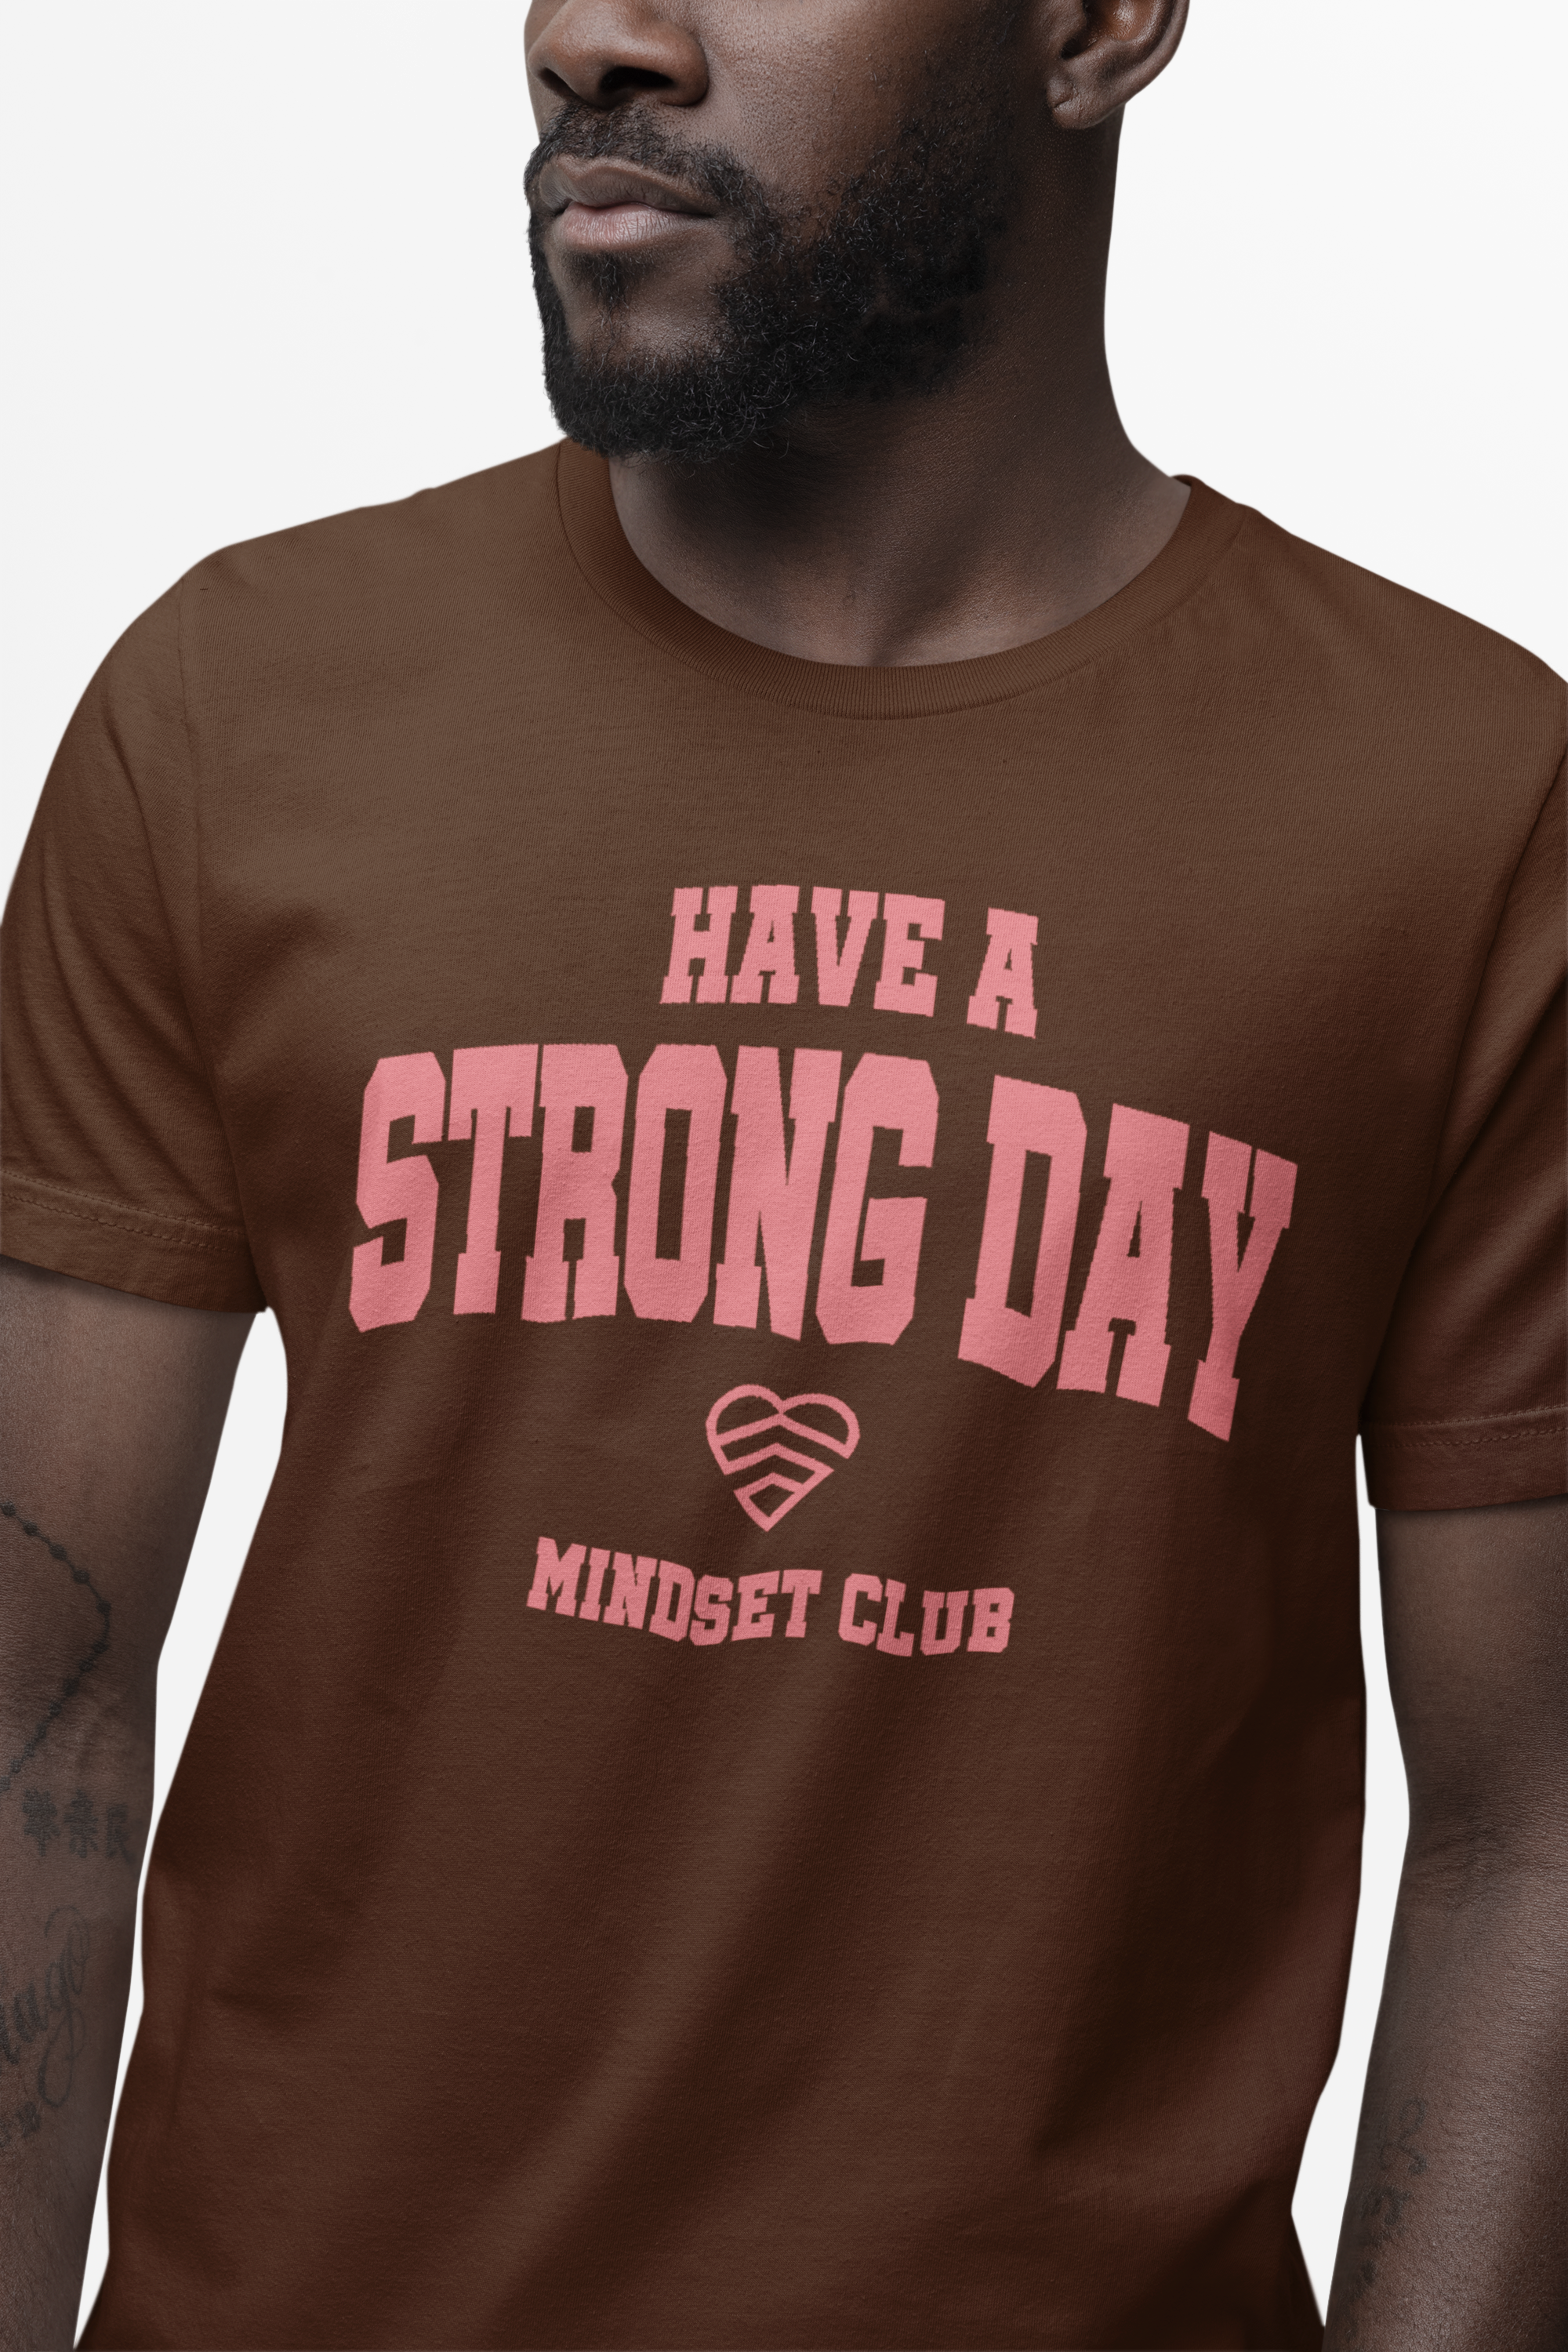 Mindset Club Statement Shirt - Chocolate